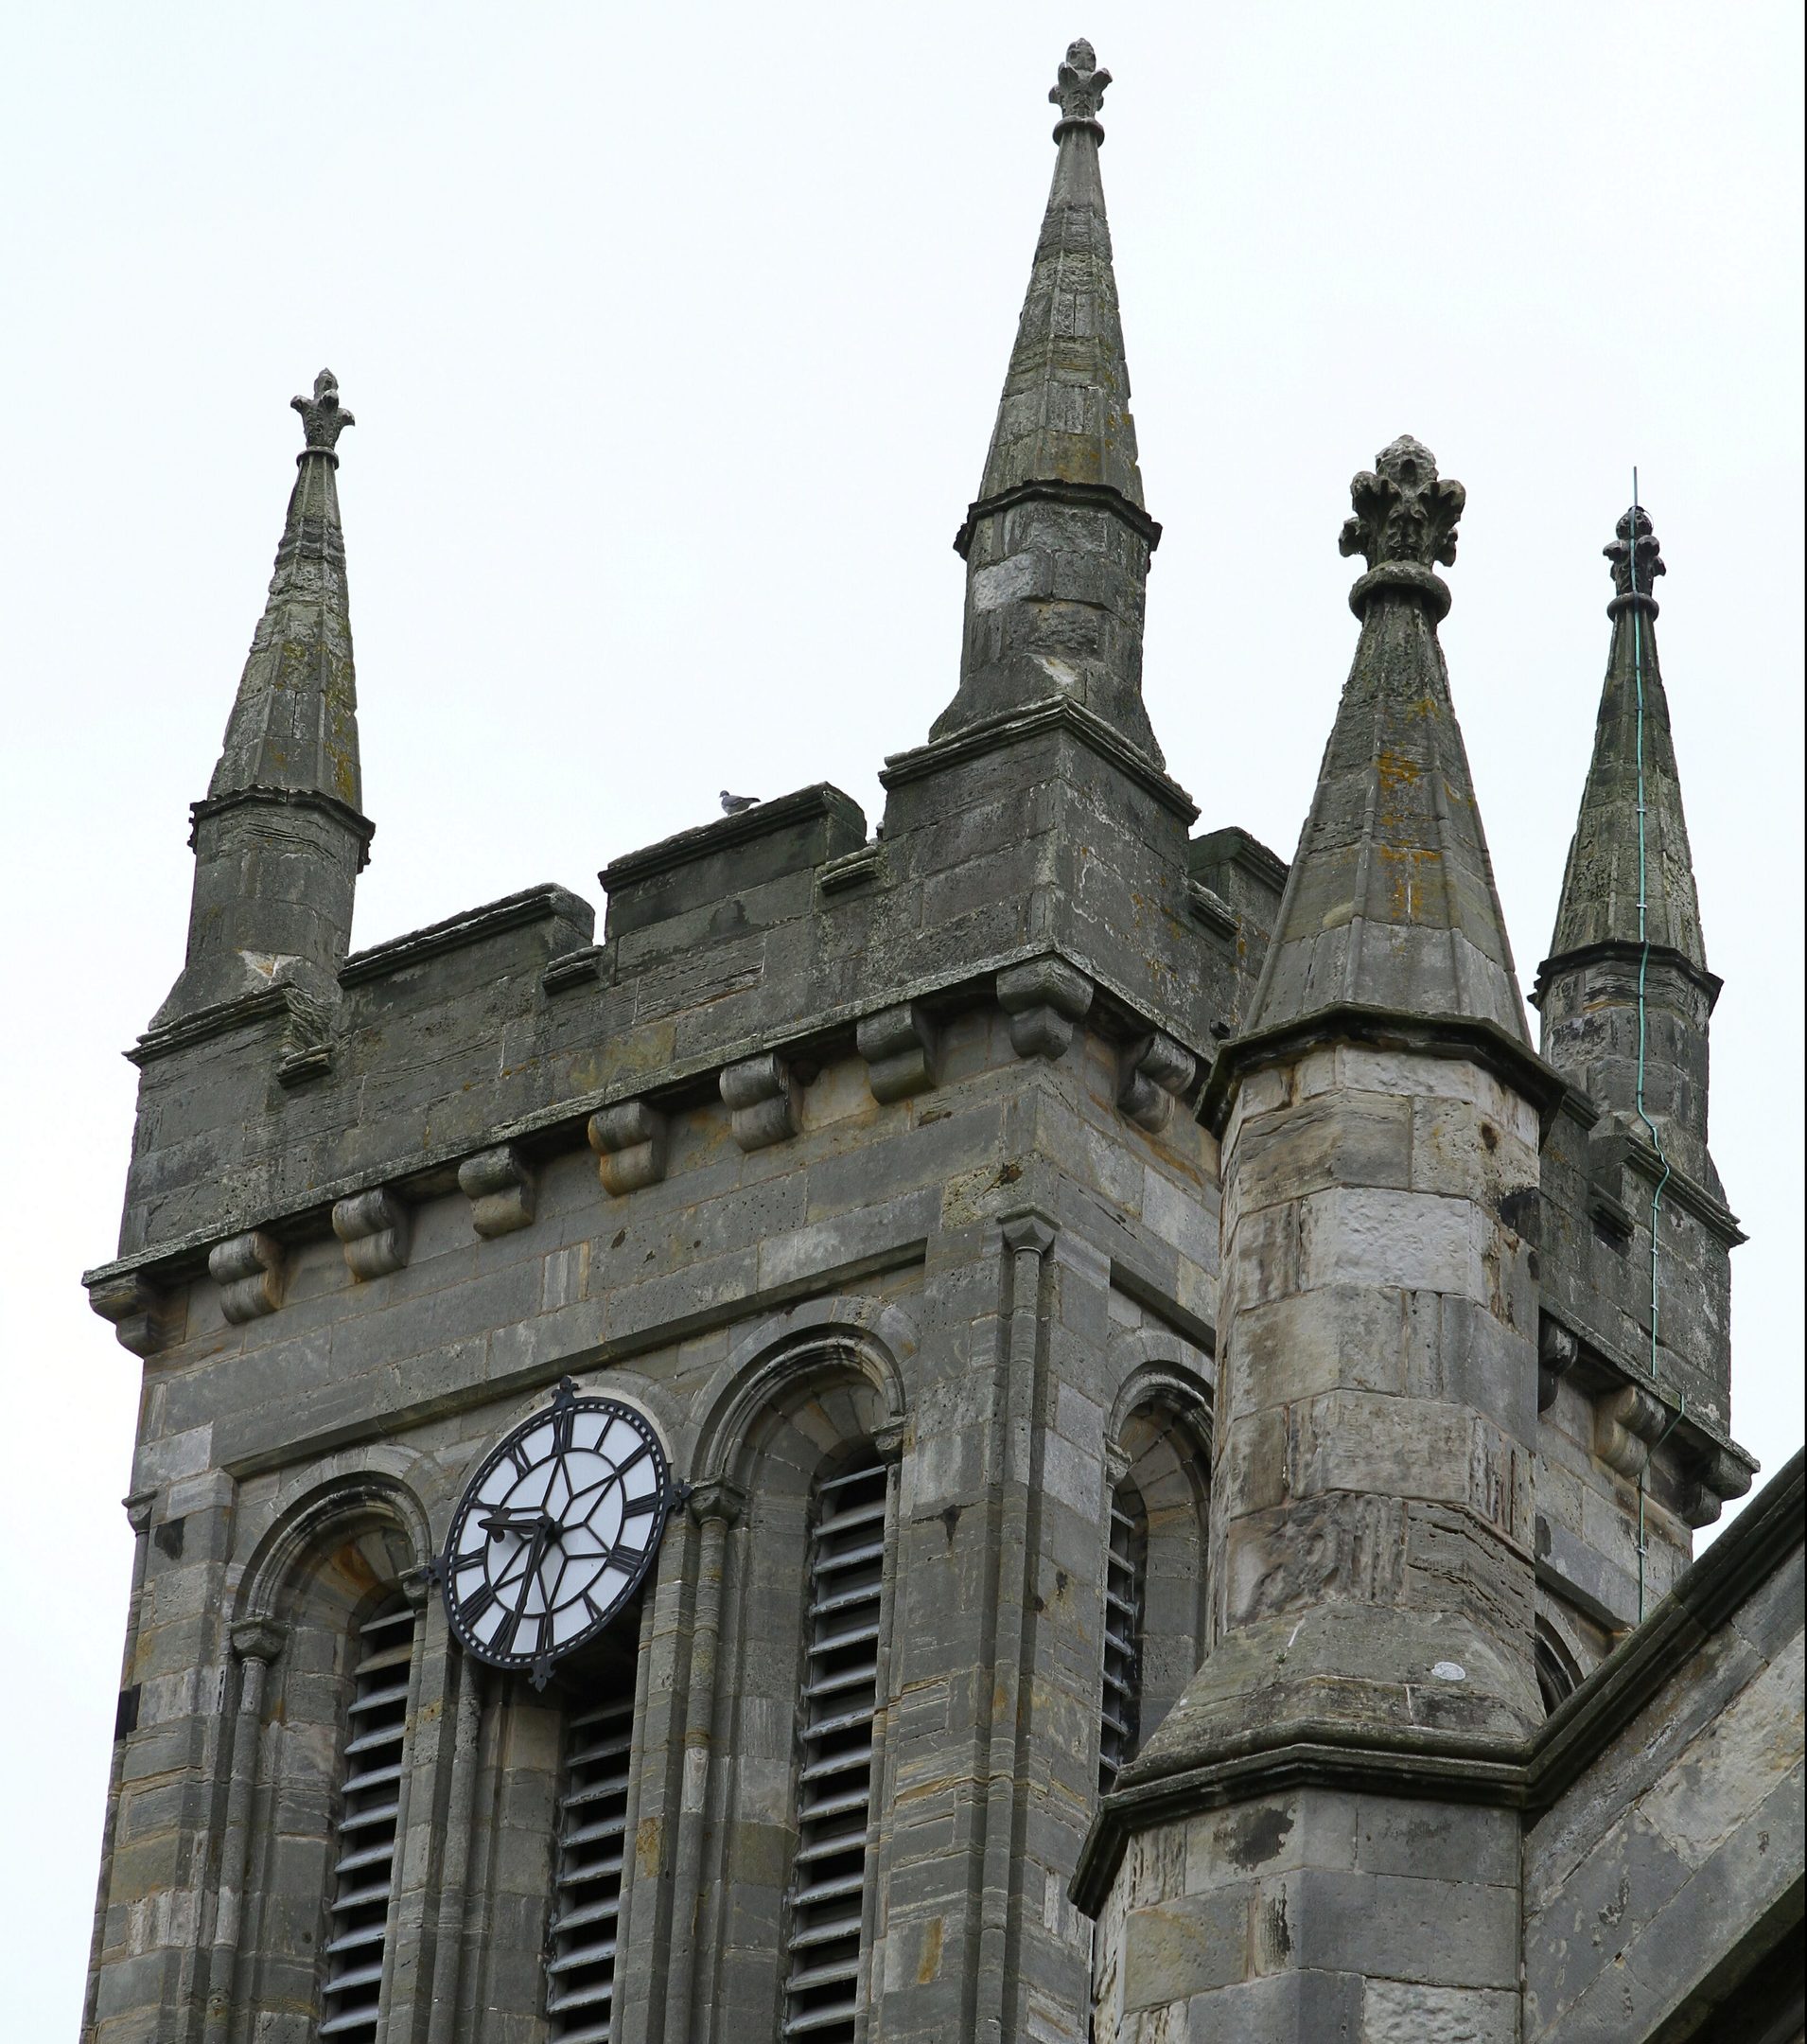 The bell tower at Errol Parish Church.